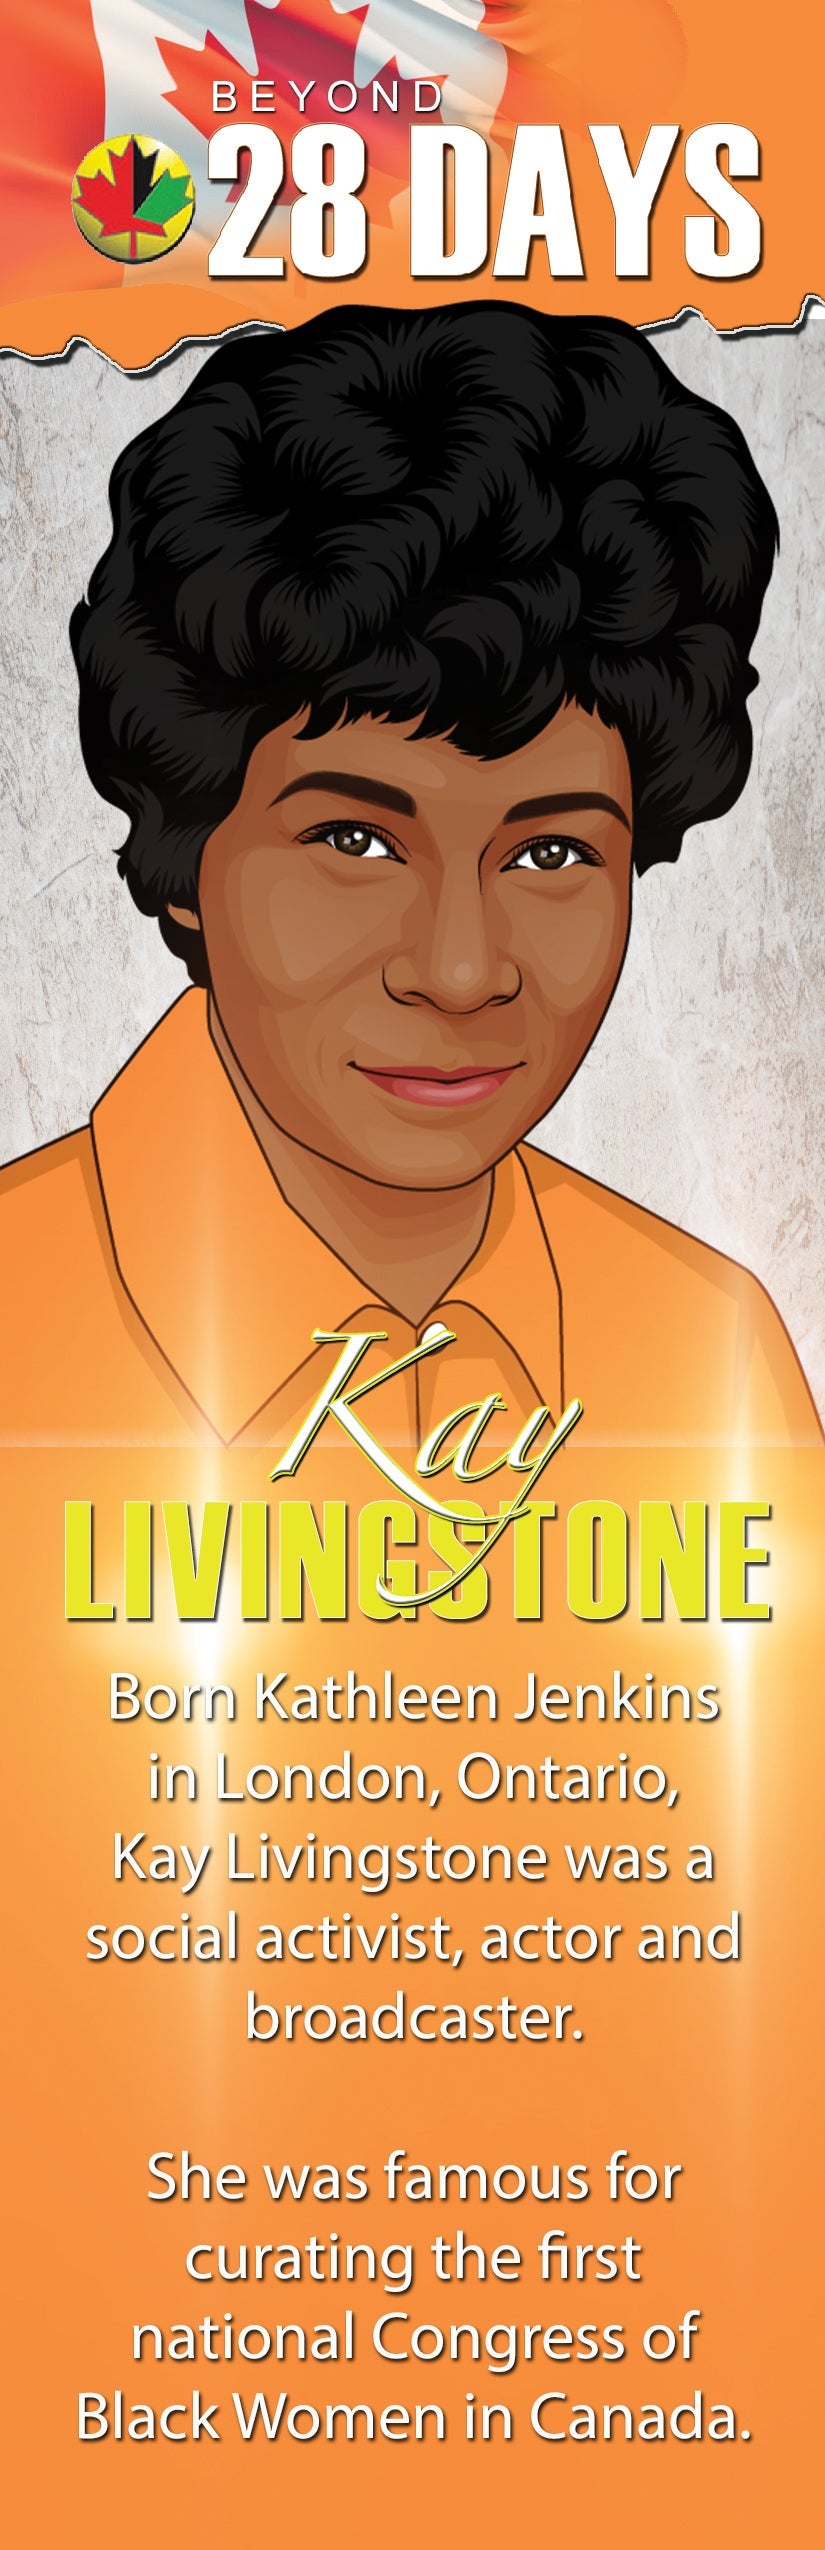 Social activist Kay Livingstone